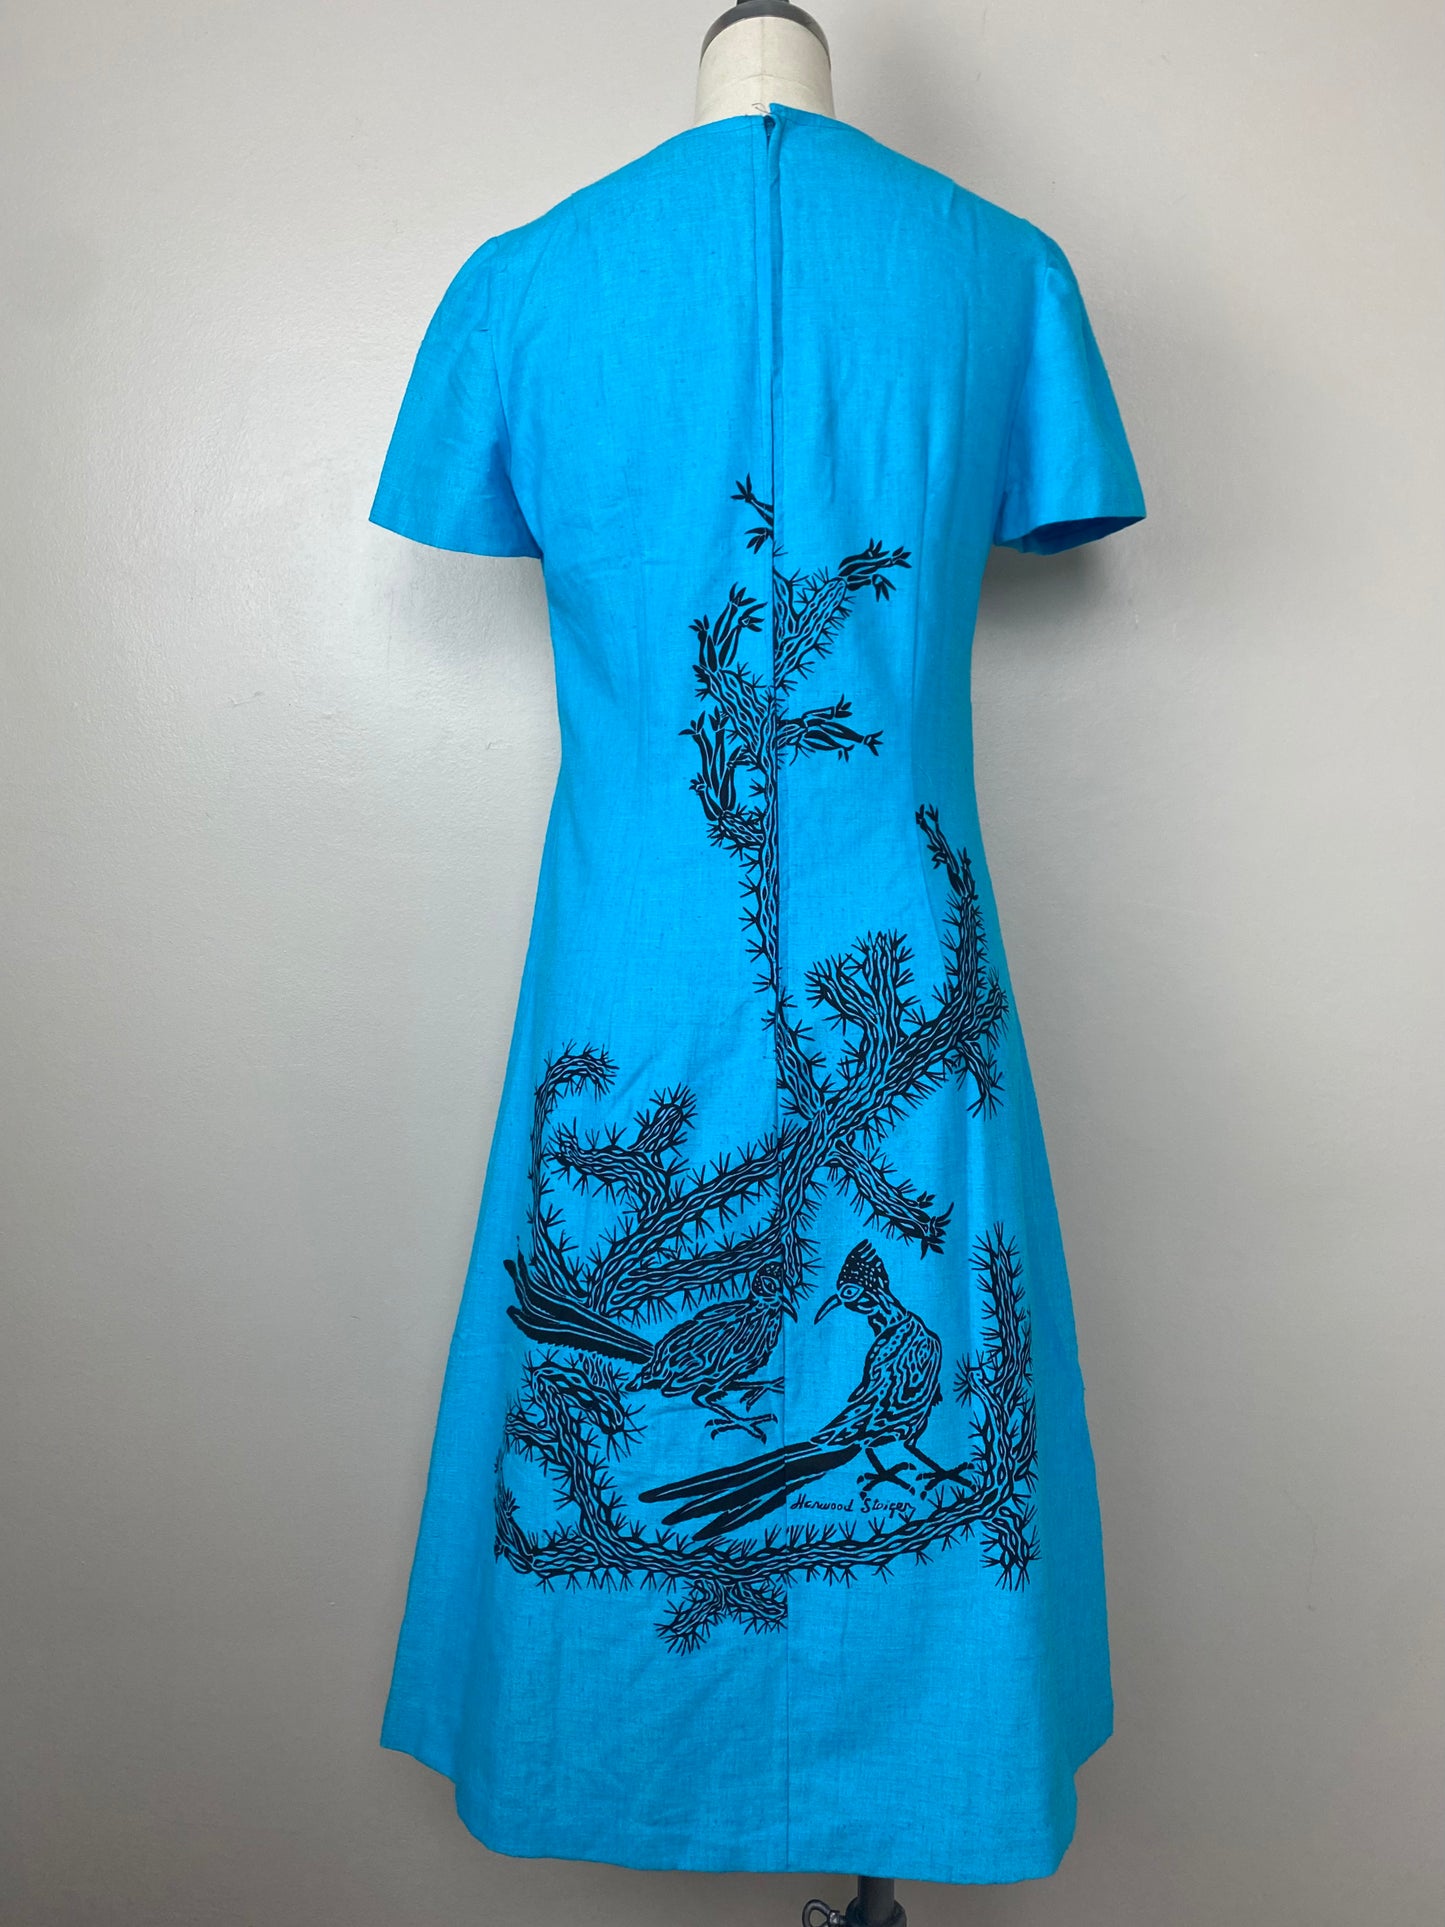 1960s Harwood Steiger Dress, Hand Printed Roadrunner, Size Small